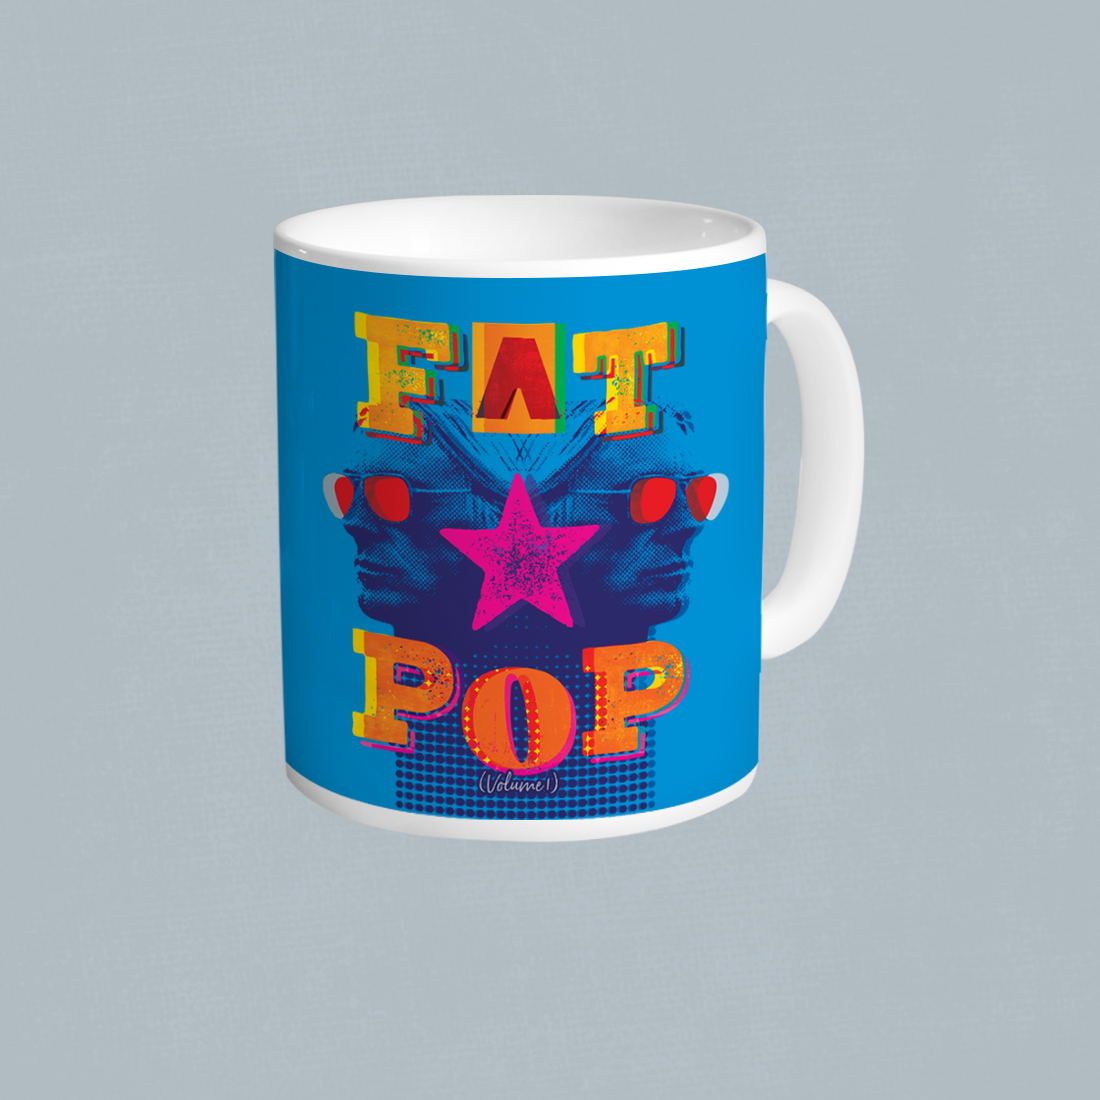 Paul Weller - Fat Pop Mug